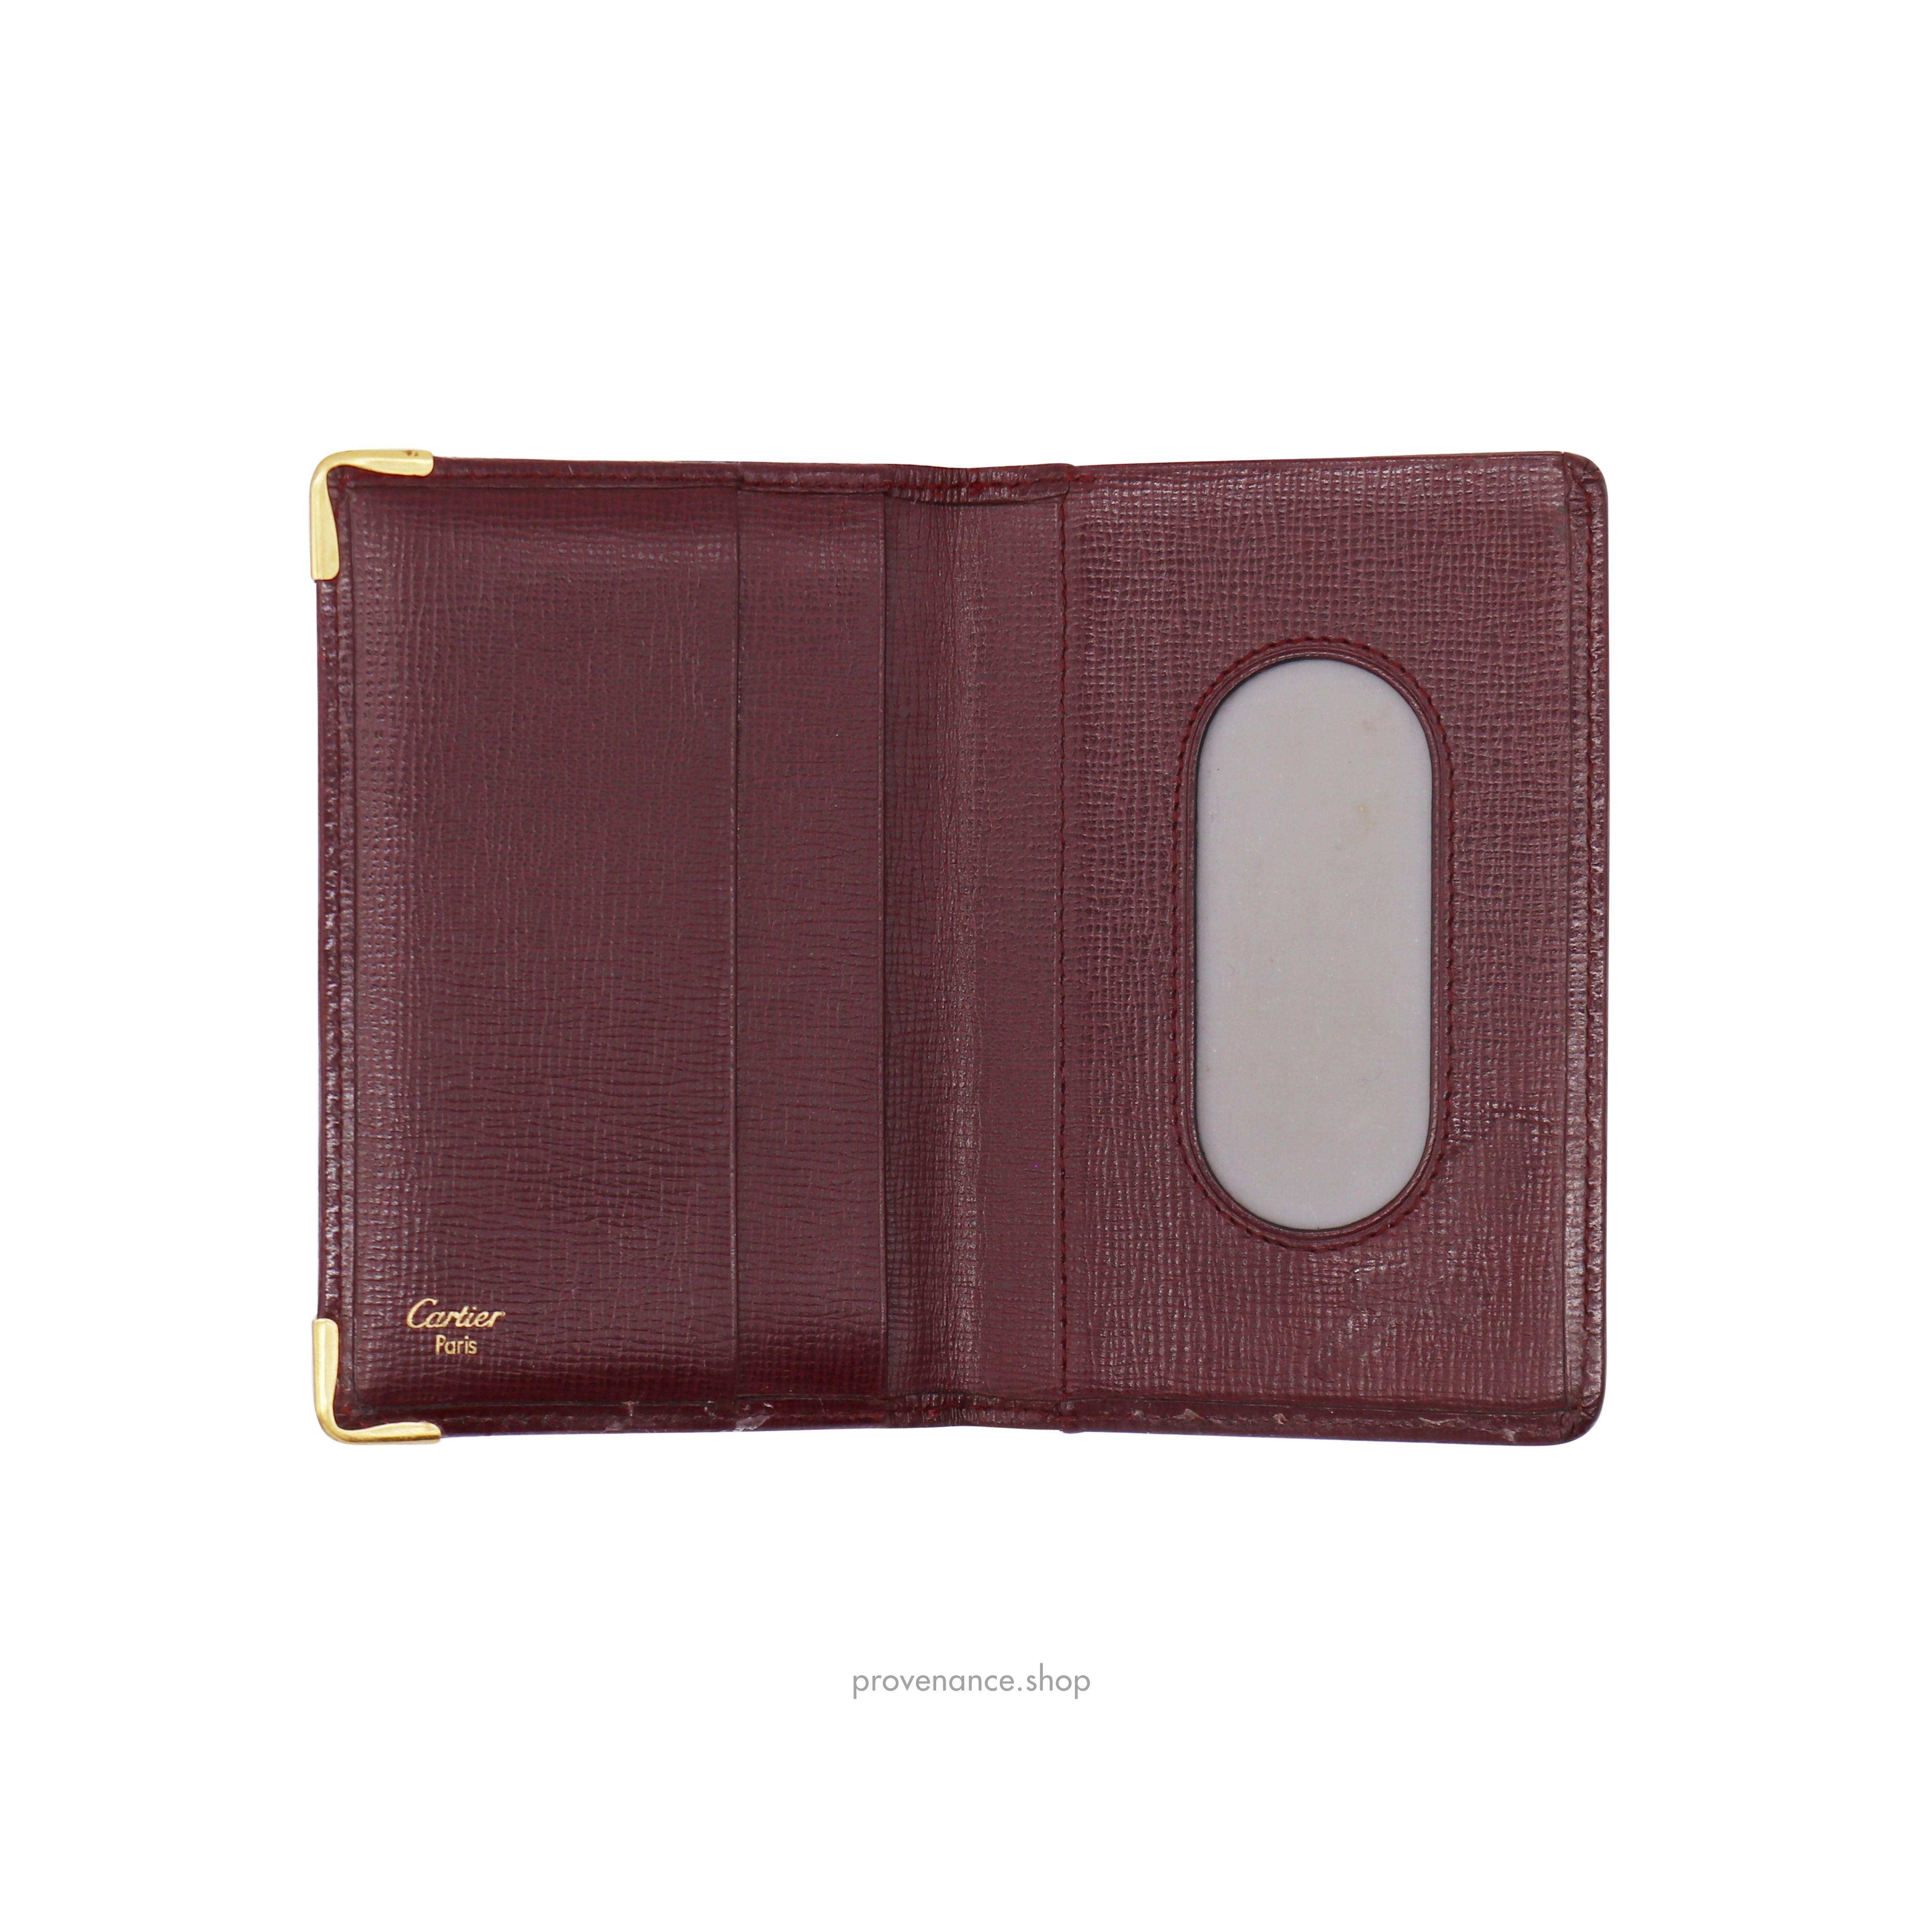 Cartier Pocket Organizer Wallet - Burgundy Leather - 5